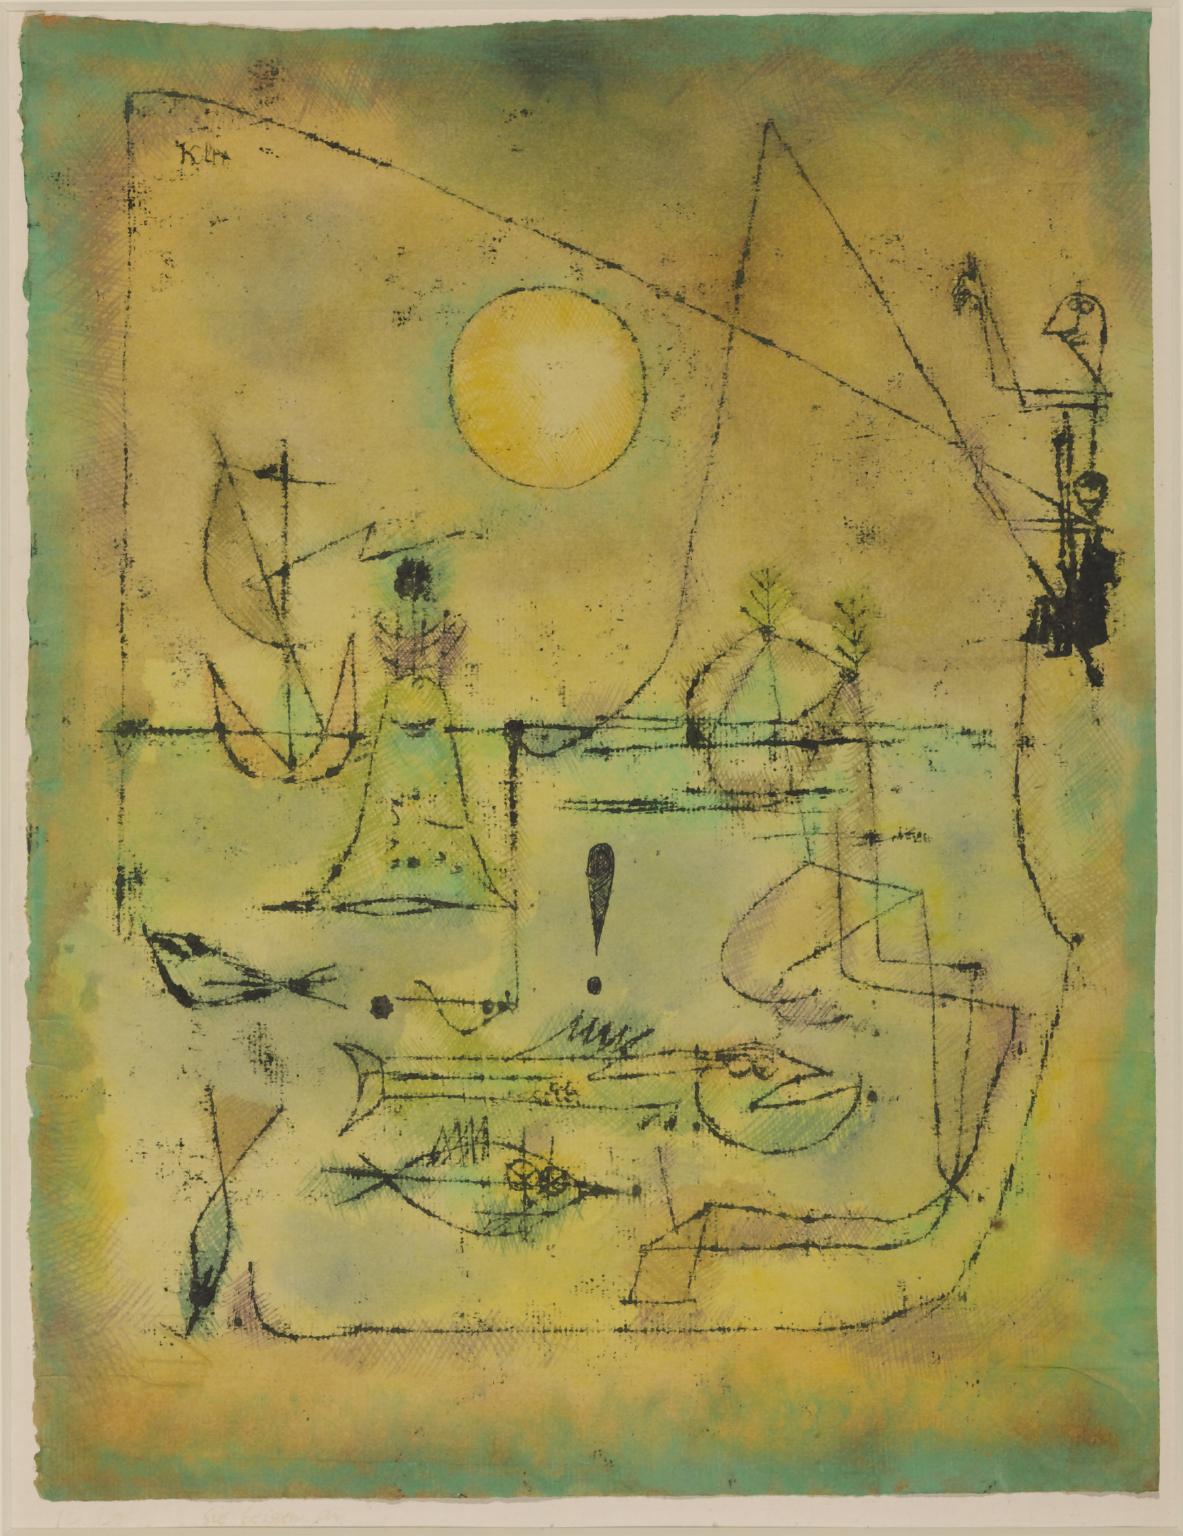 Paul Klee, They’re Biting, 1920, Tate, London. https://www.tate.org.uk/art/artworks/klee-theyre-biting-n05658